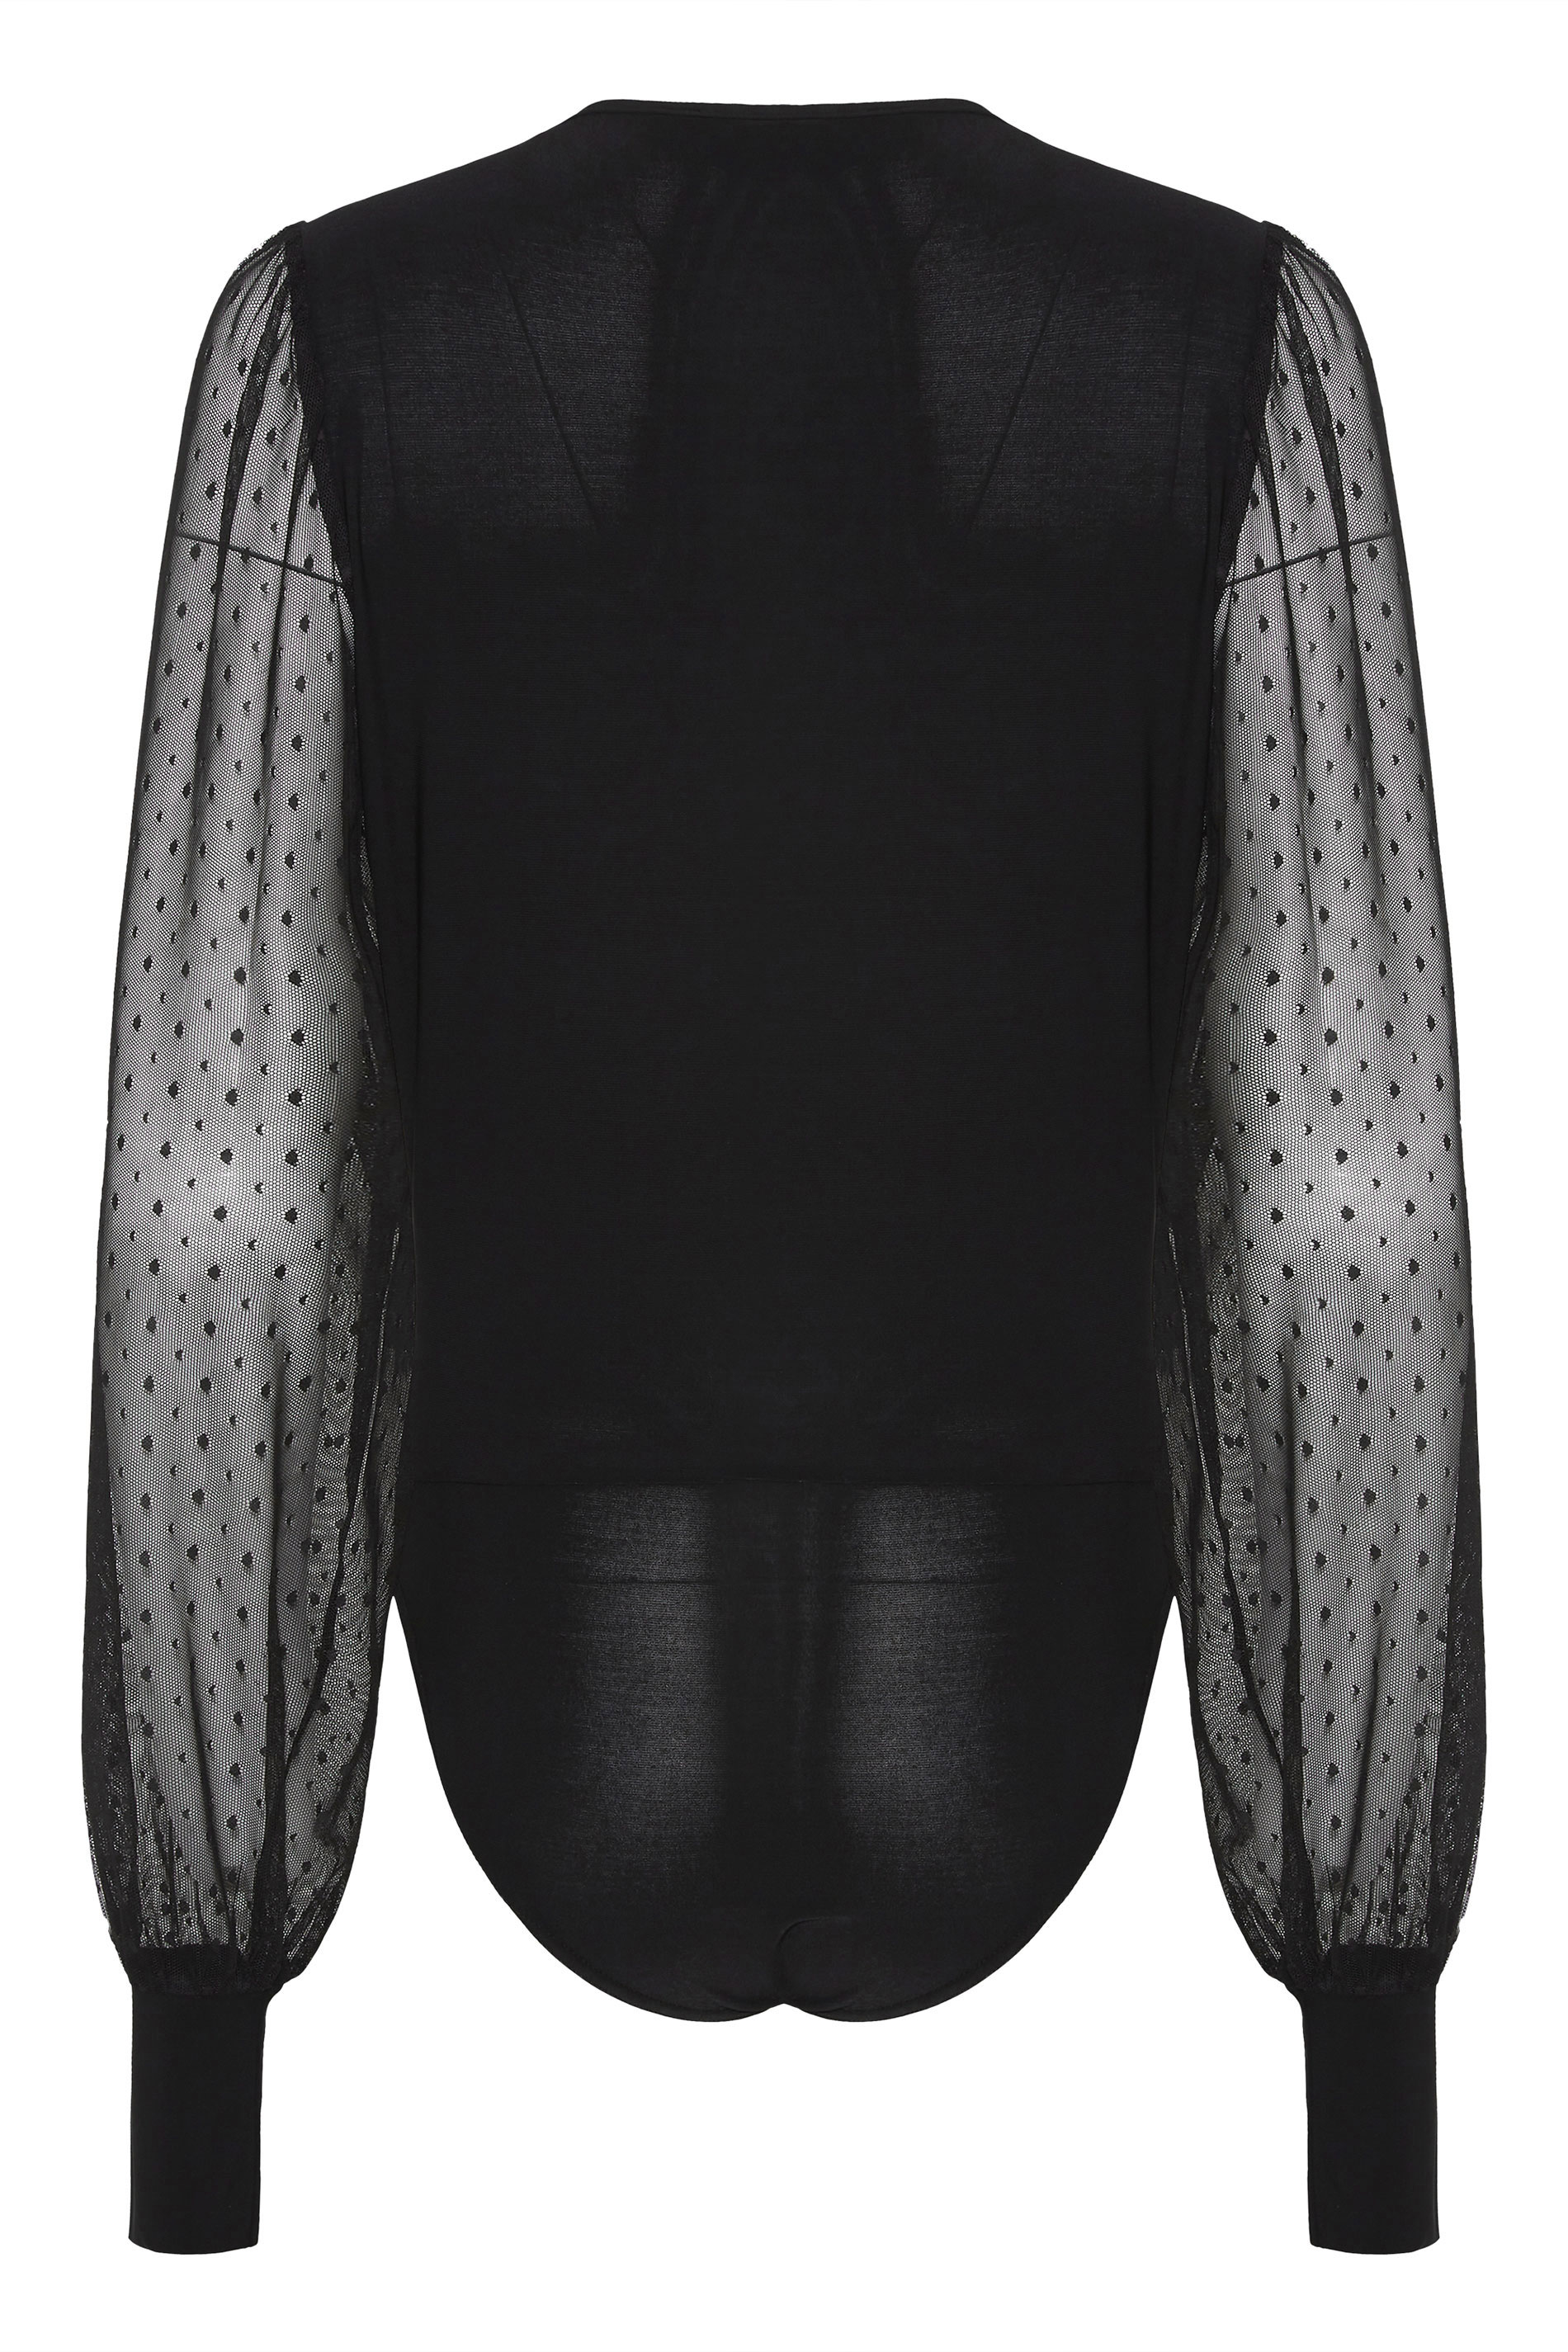 Tall Women's LTS Black Spot Mesh Sleeve Bodysuit